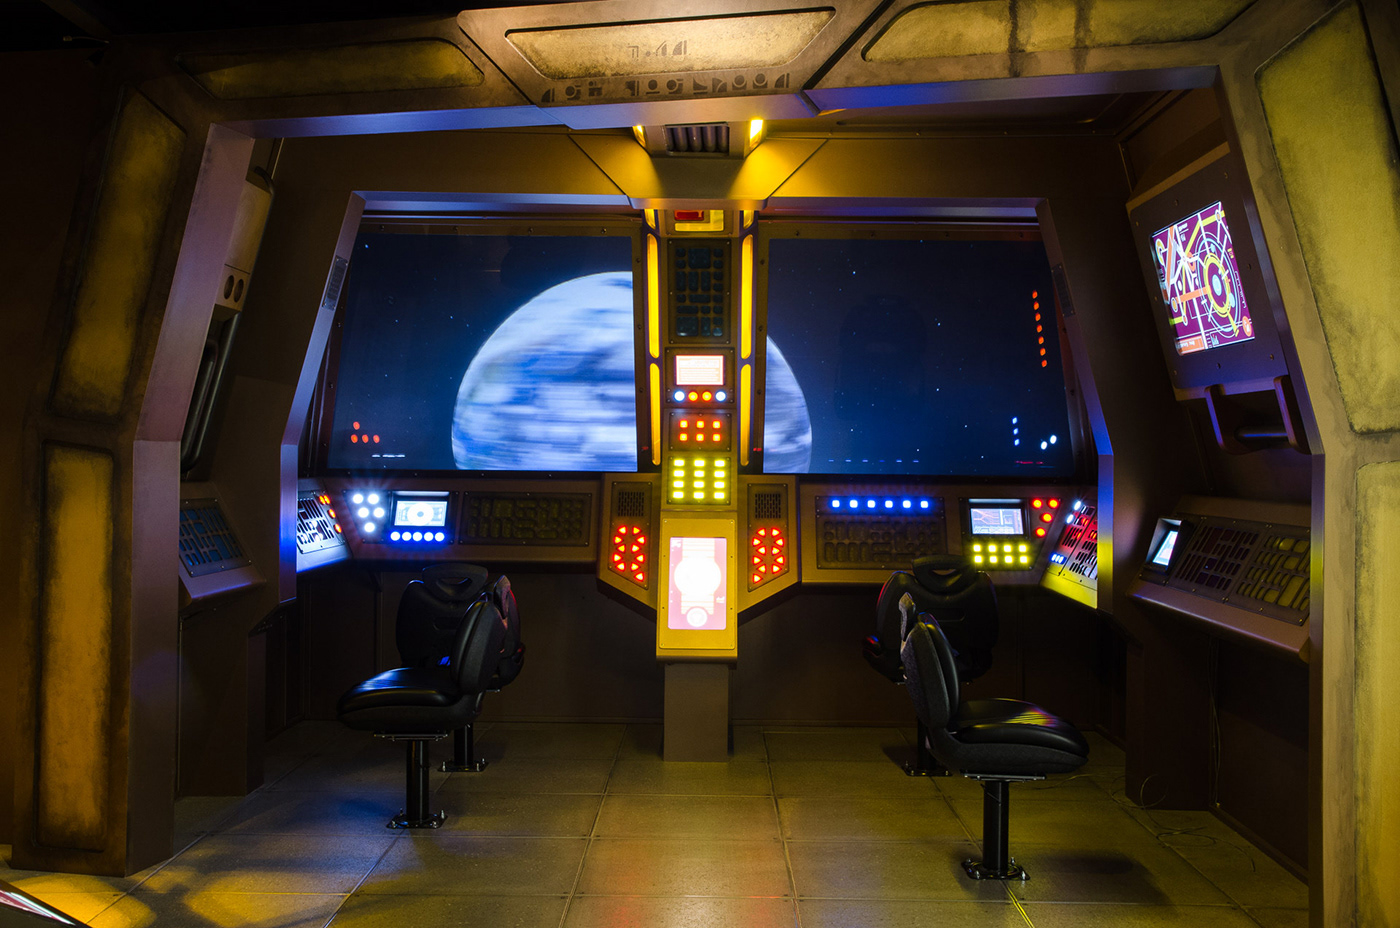 Adobe Portfolio science fiction spaceship touch-screen interactives